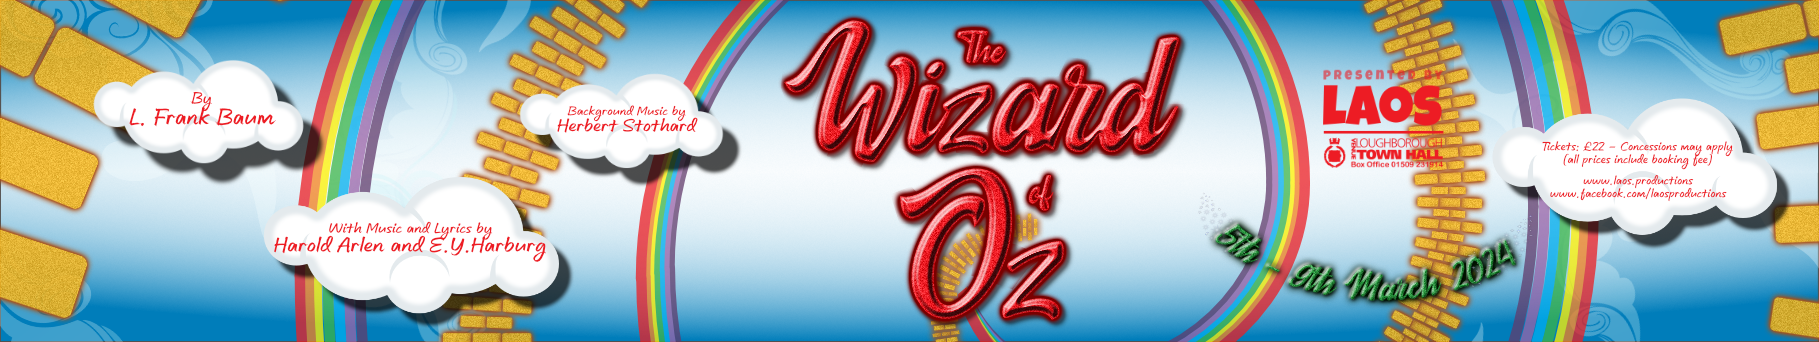 24-03 Wizard LAOS WEB BANNER